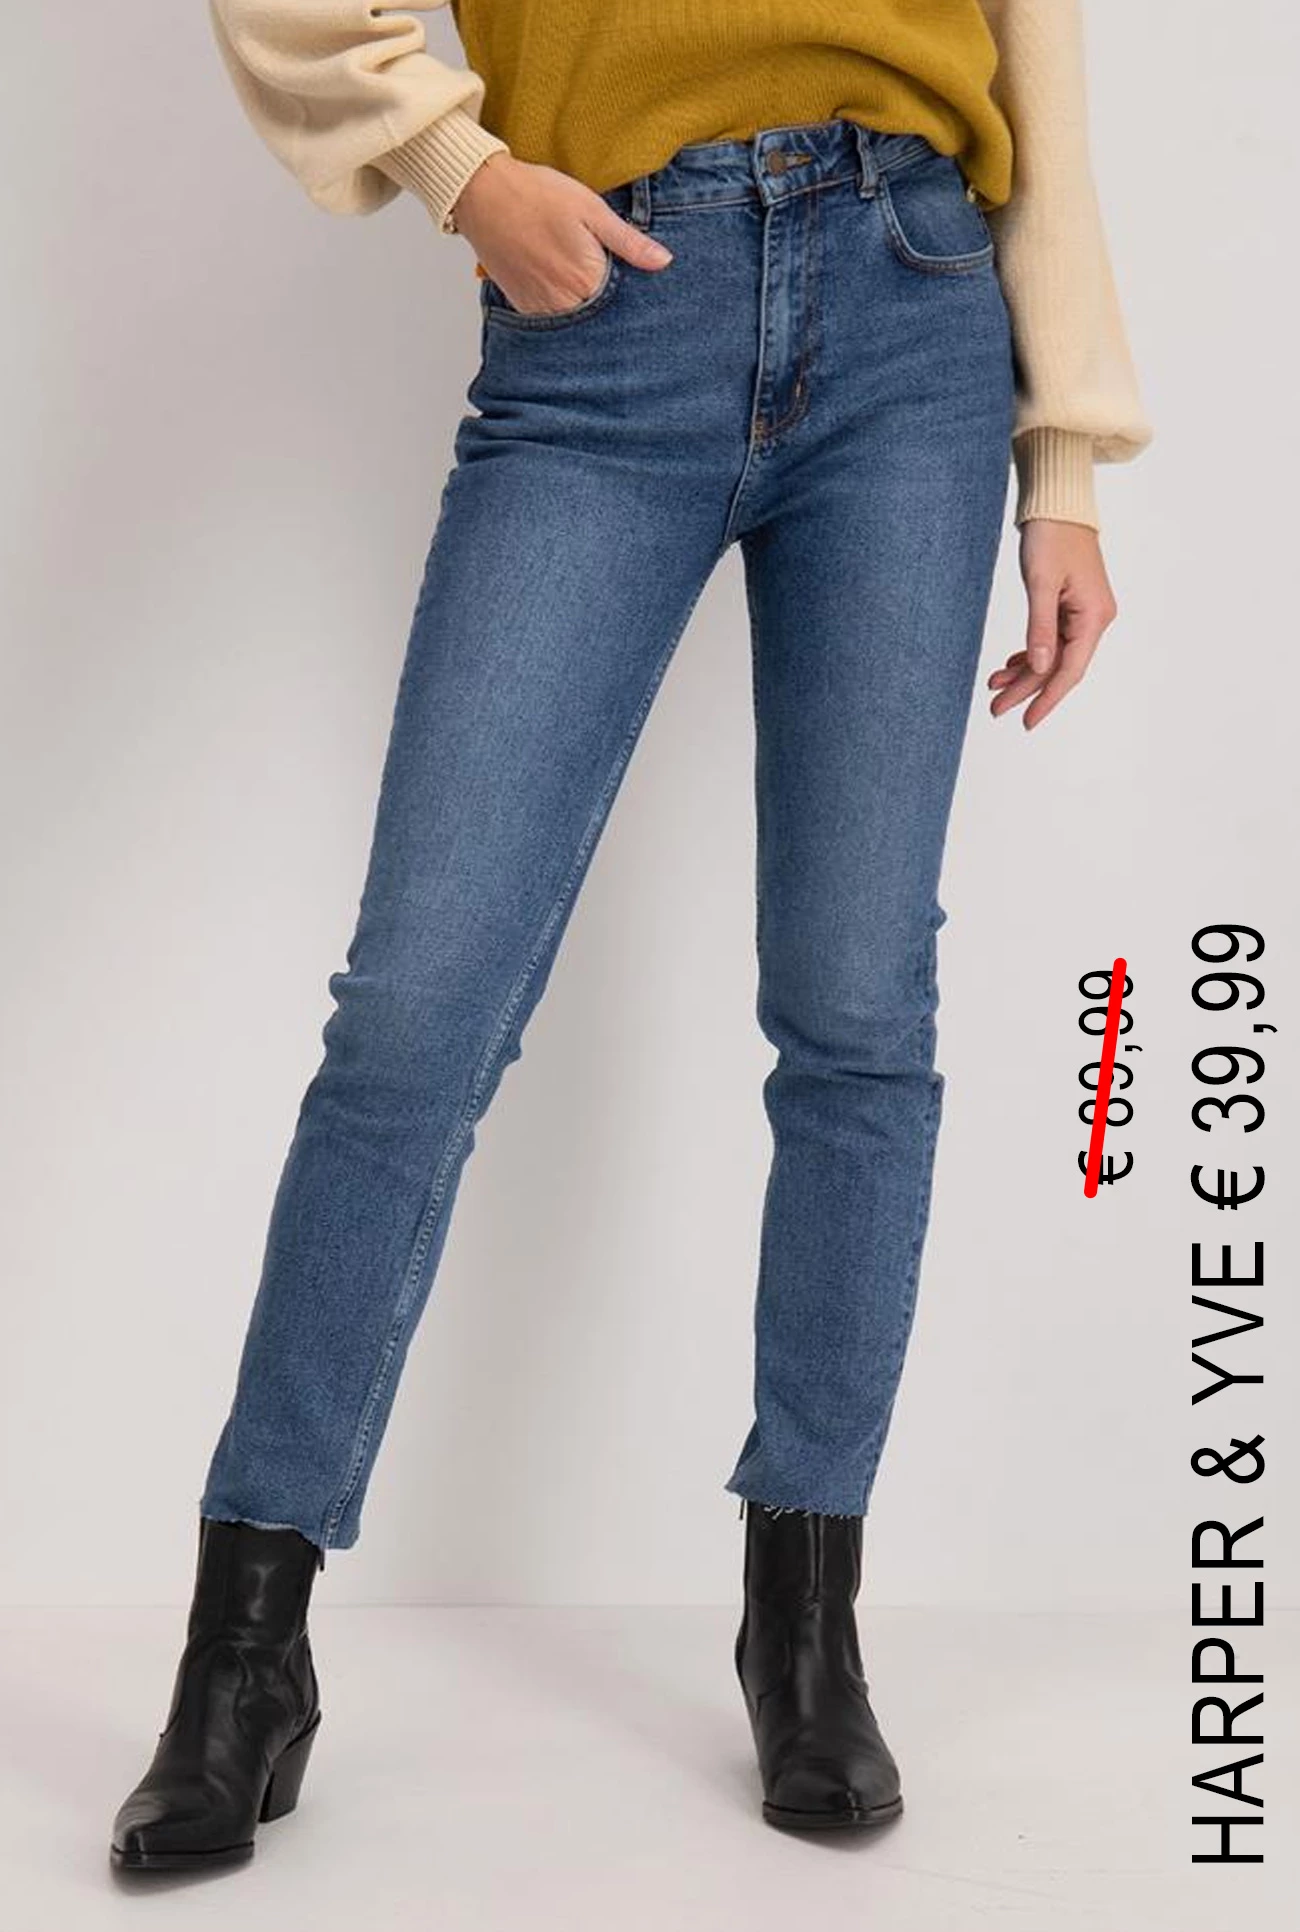 Harper & Yve Jeans